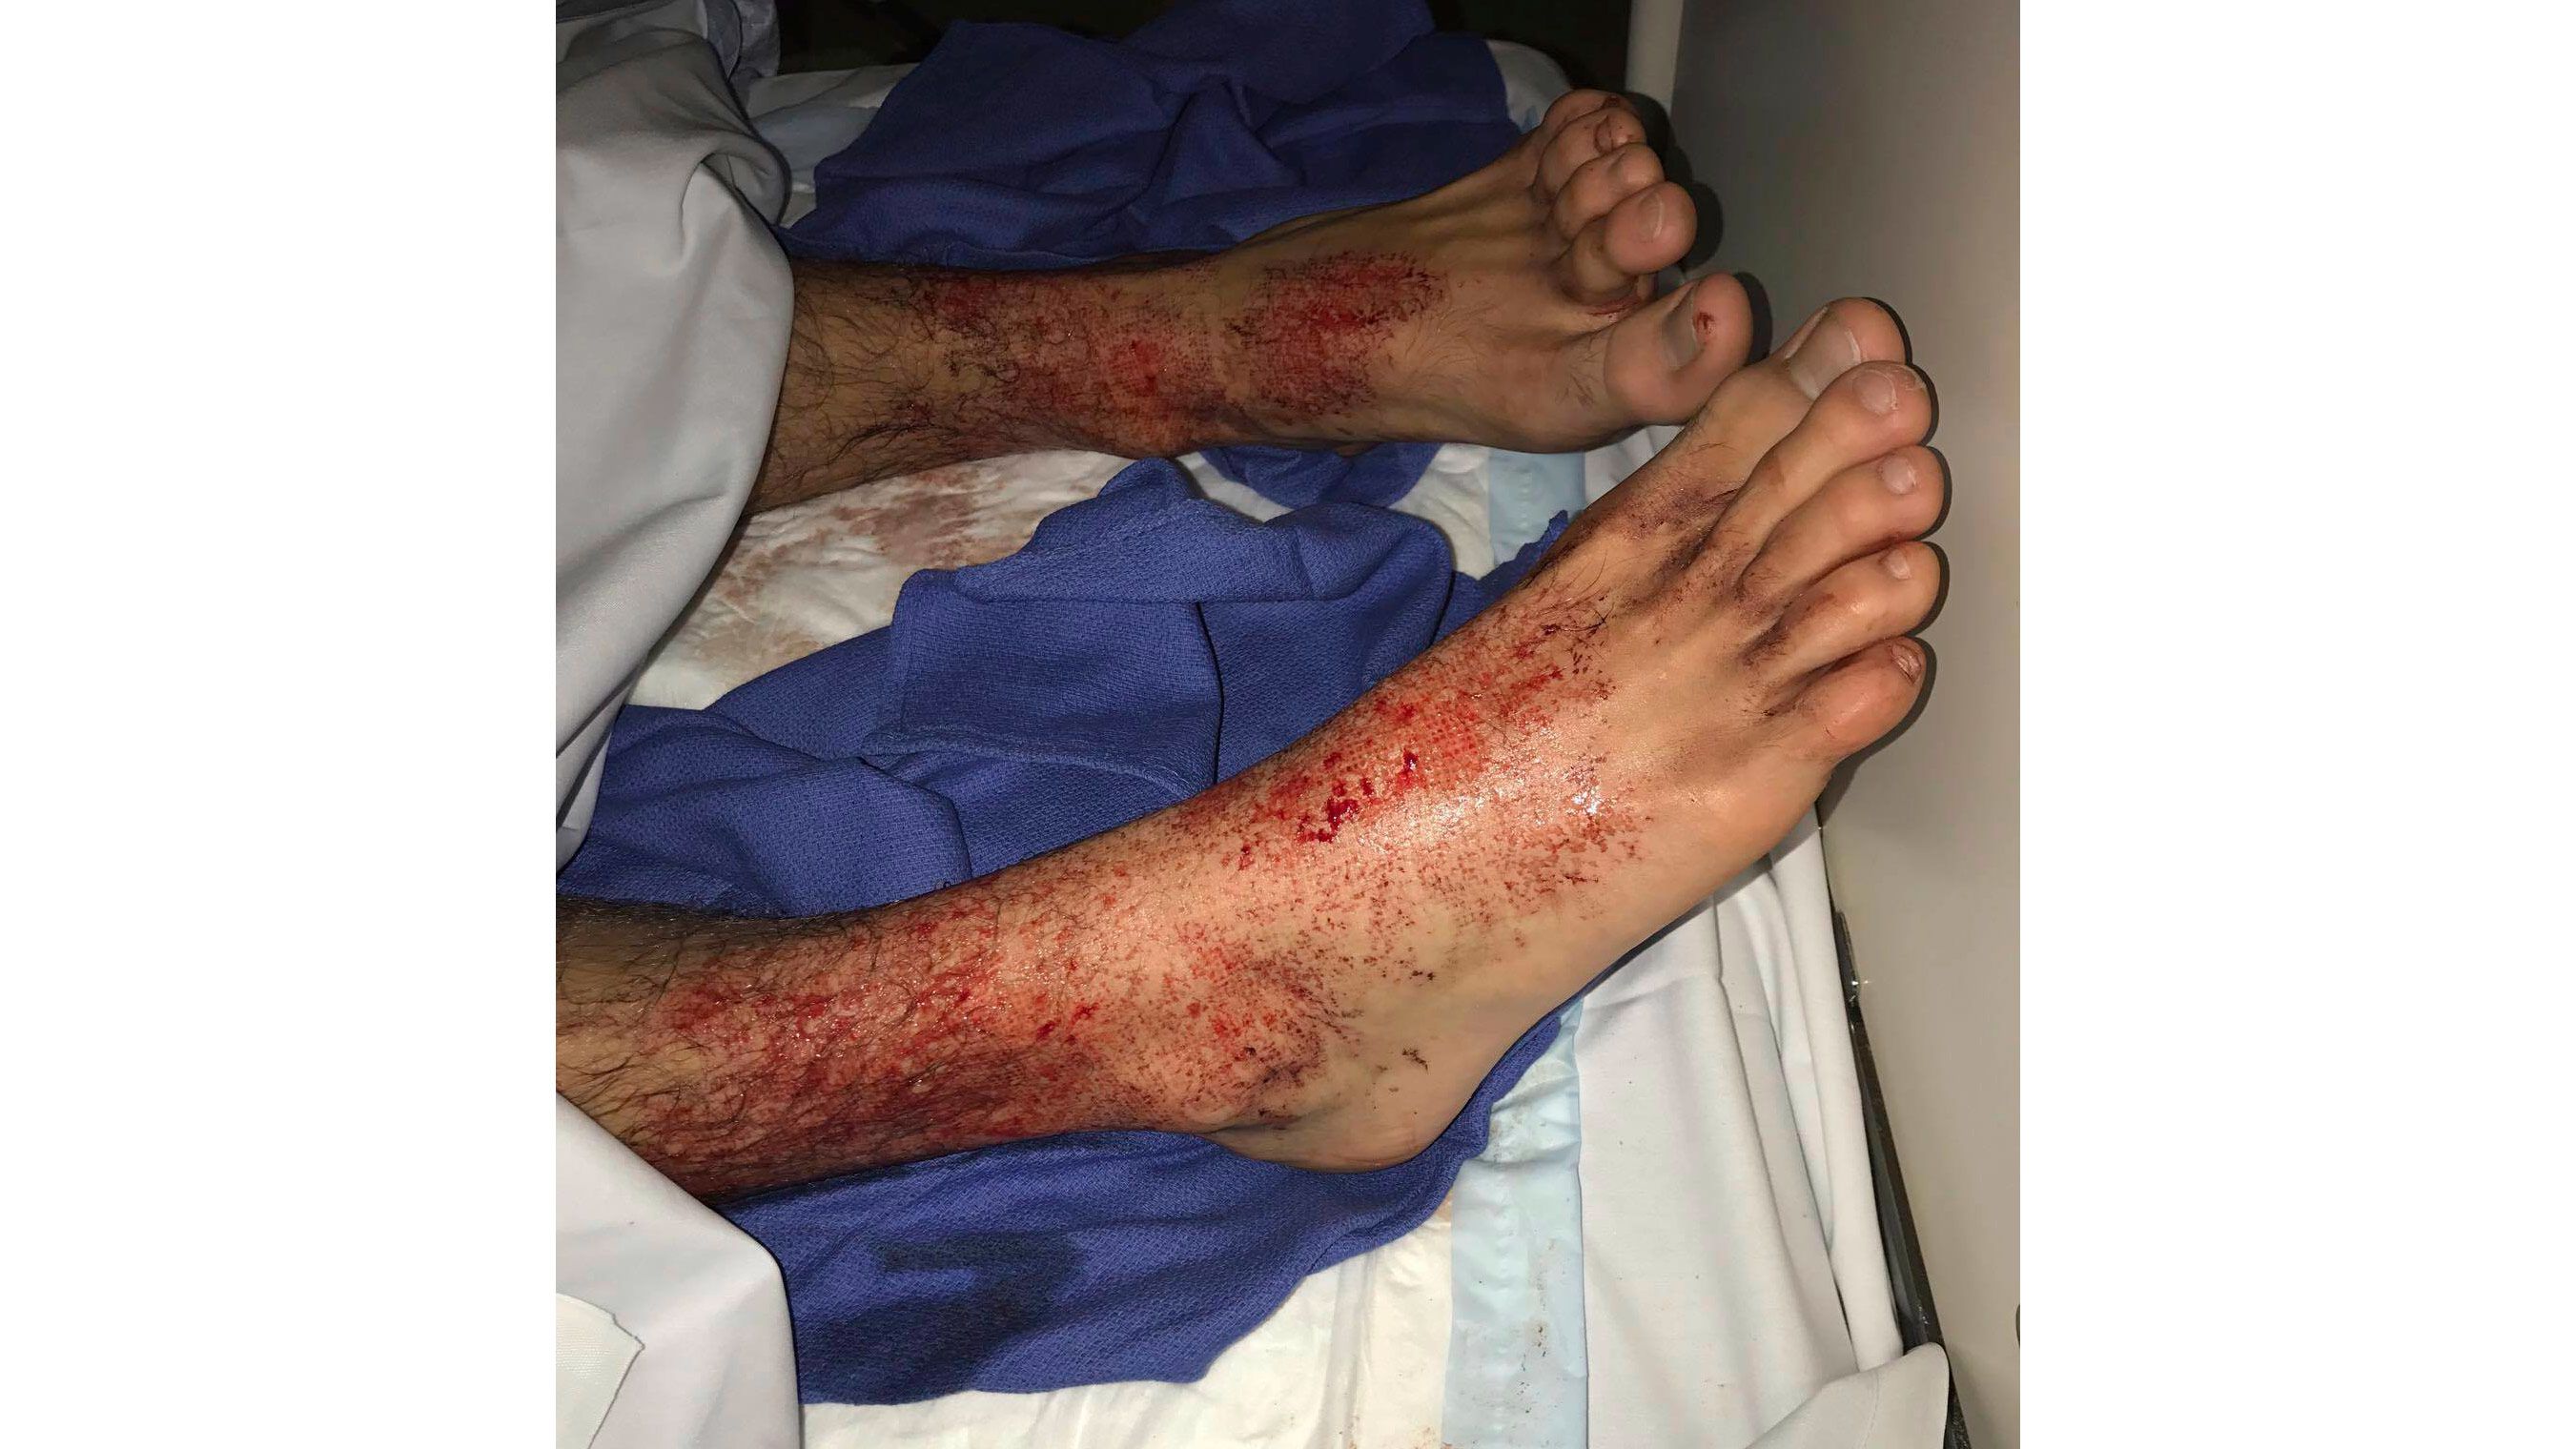 Sea fleas': What bit Australian teen's legs and feet?